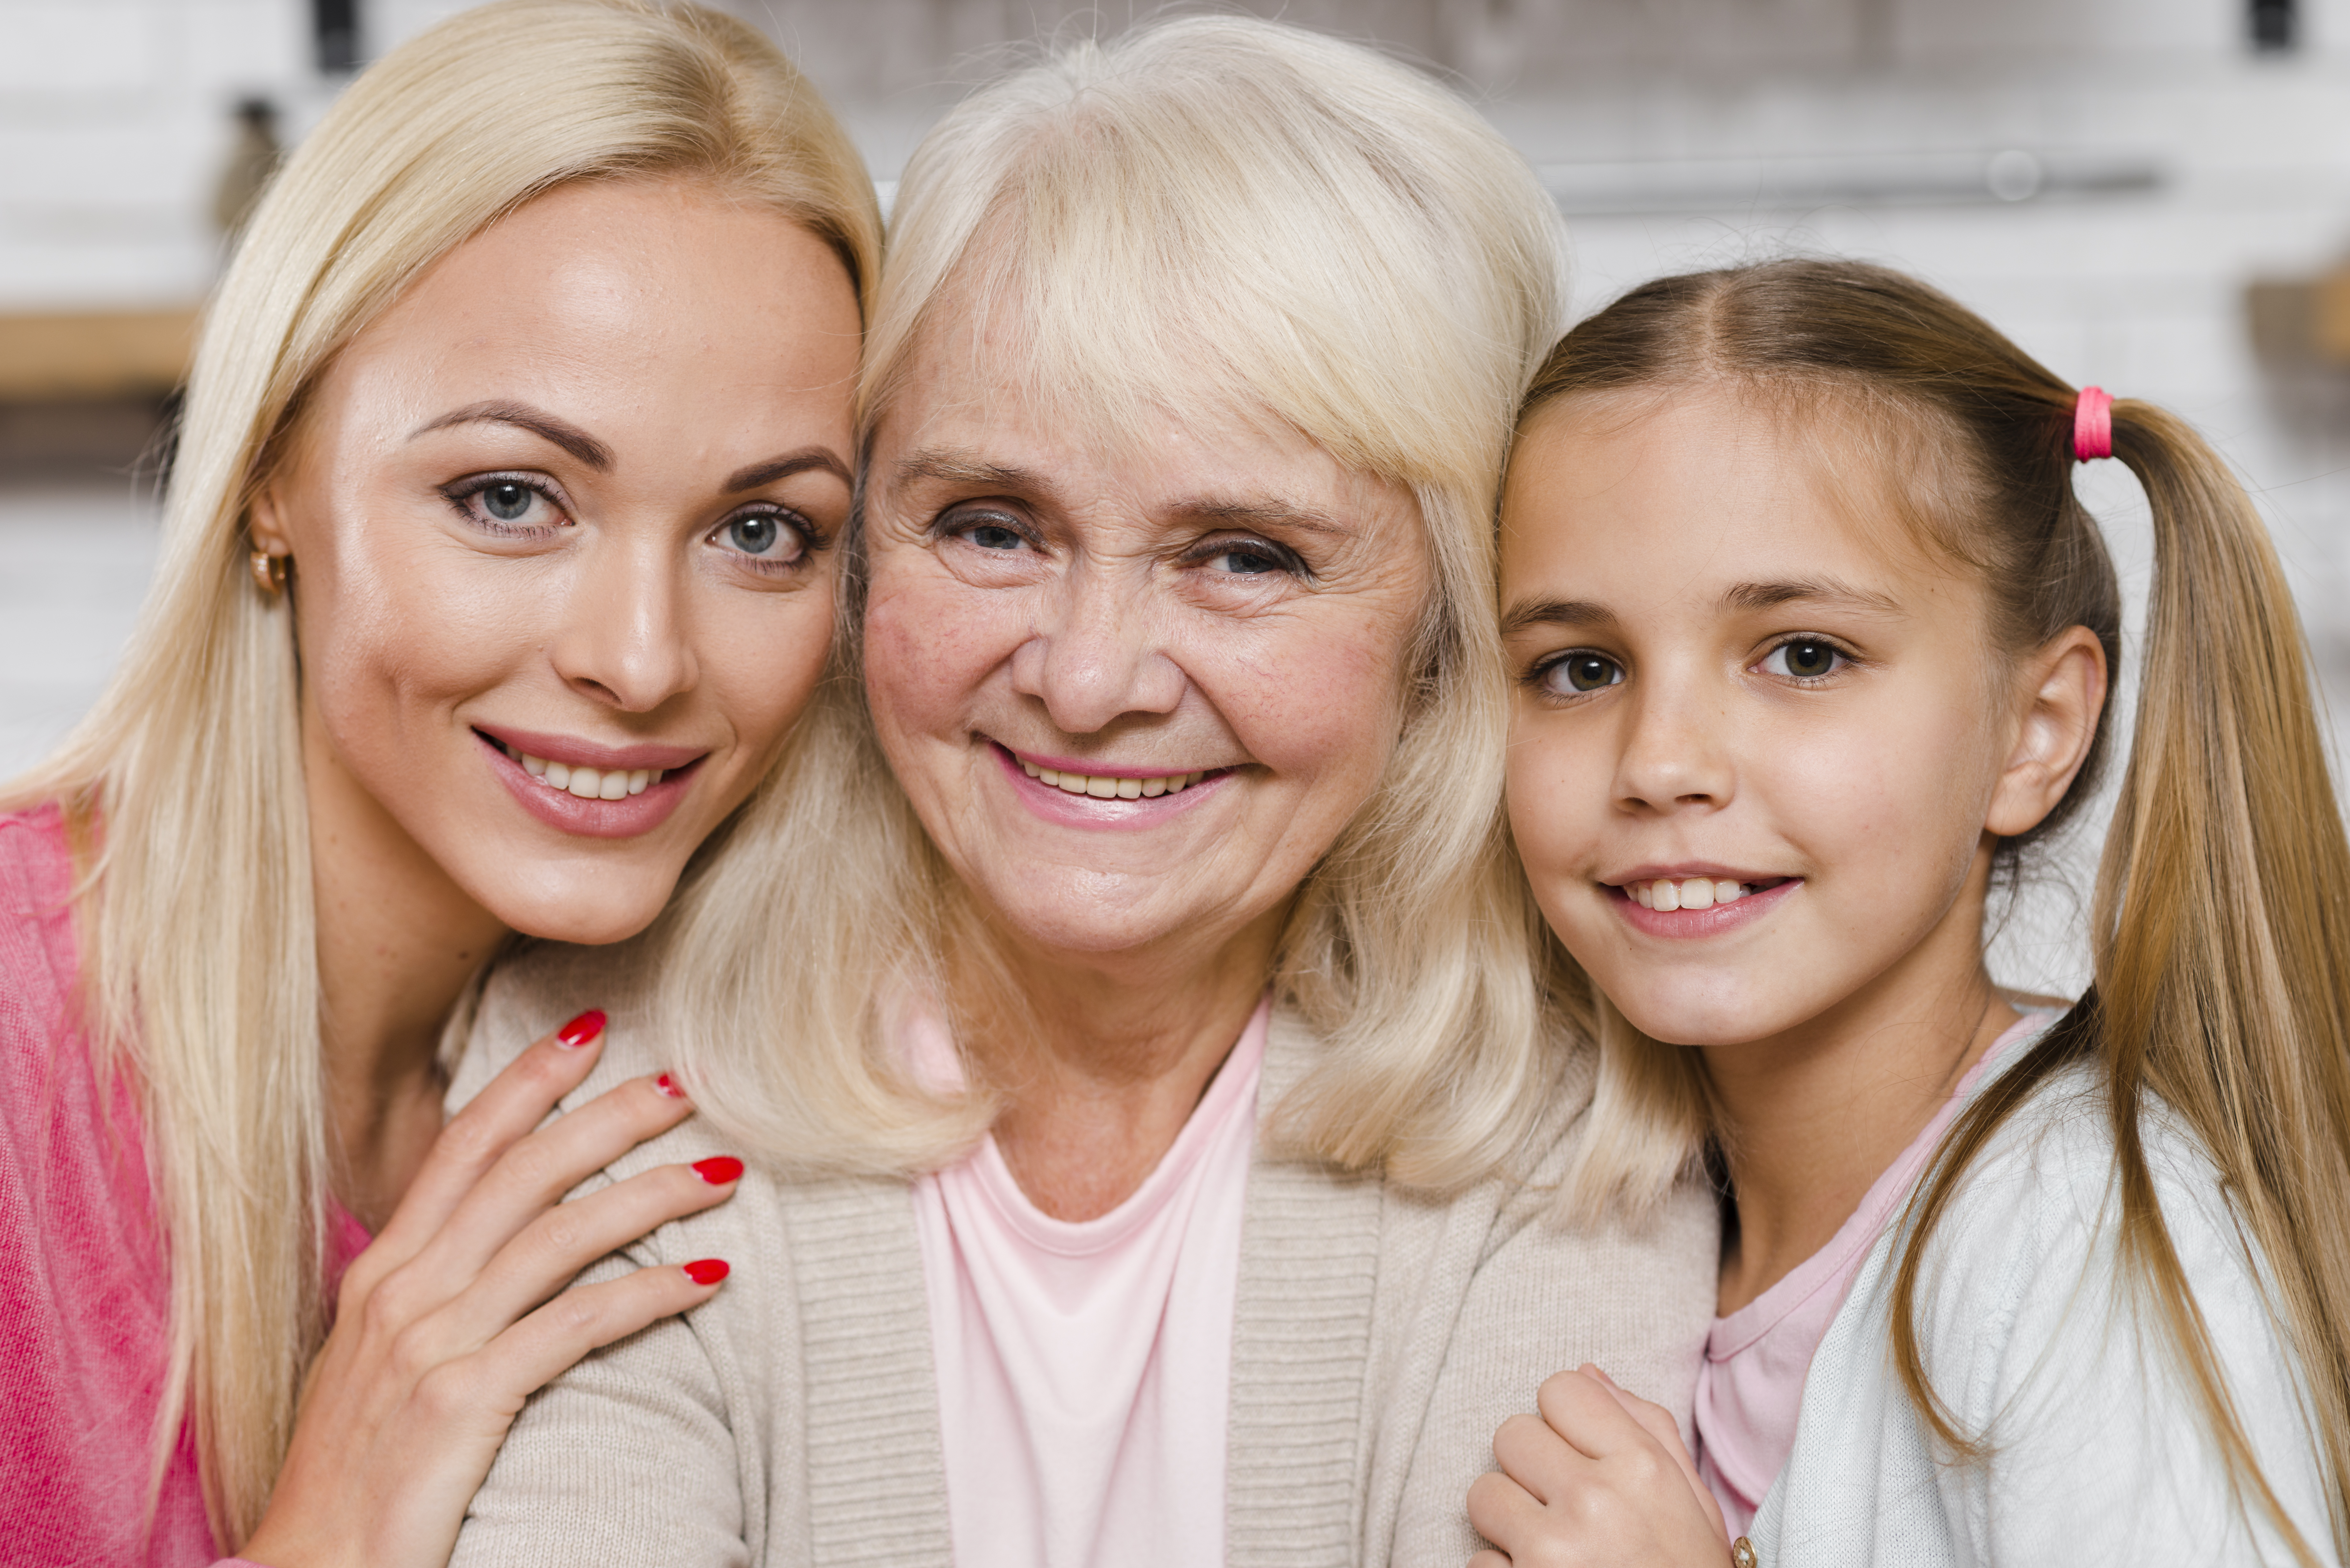 Three generations of happy women | Source: Freepik